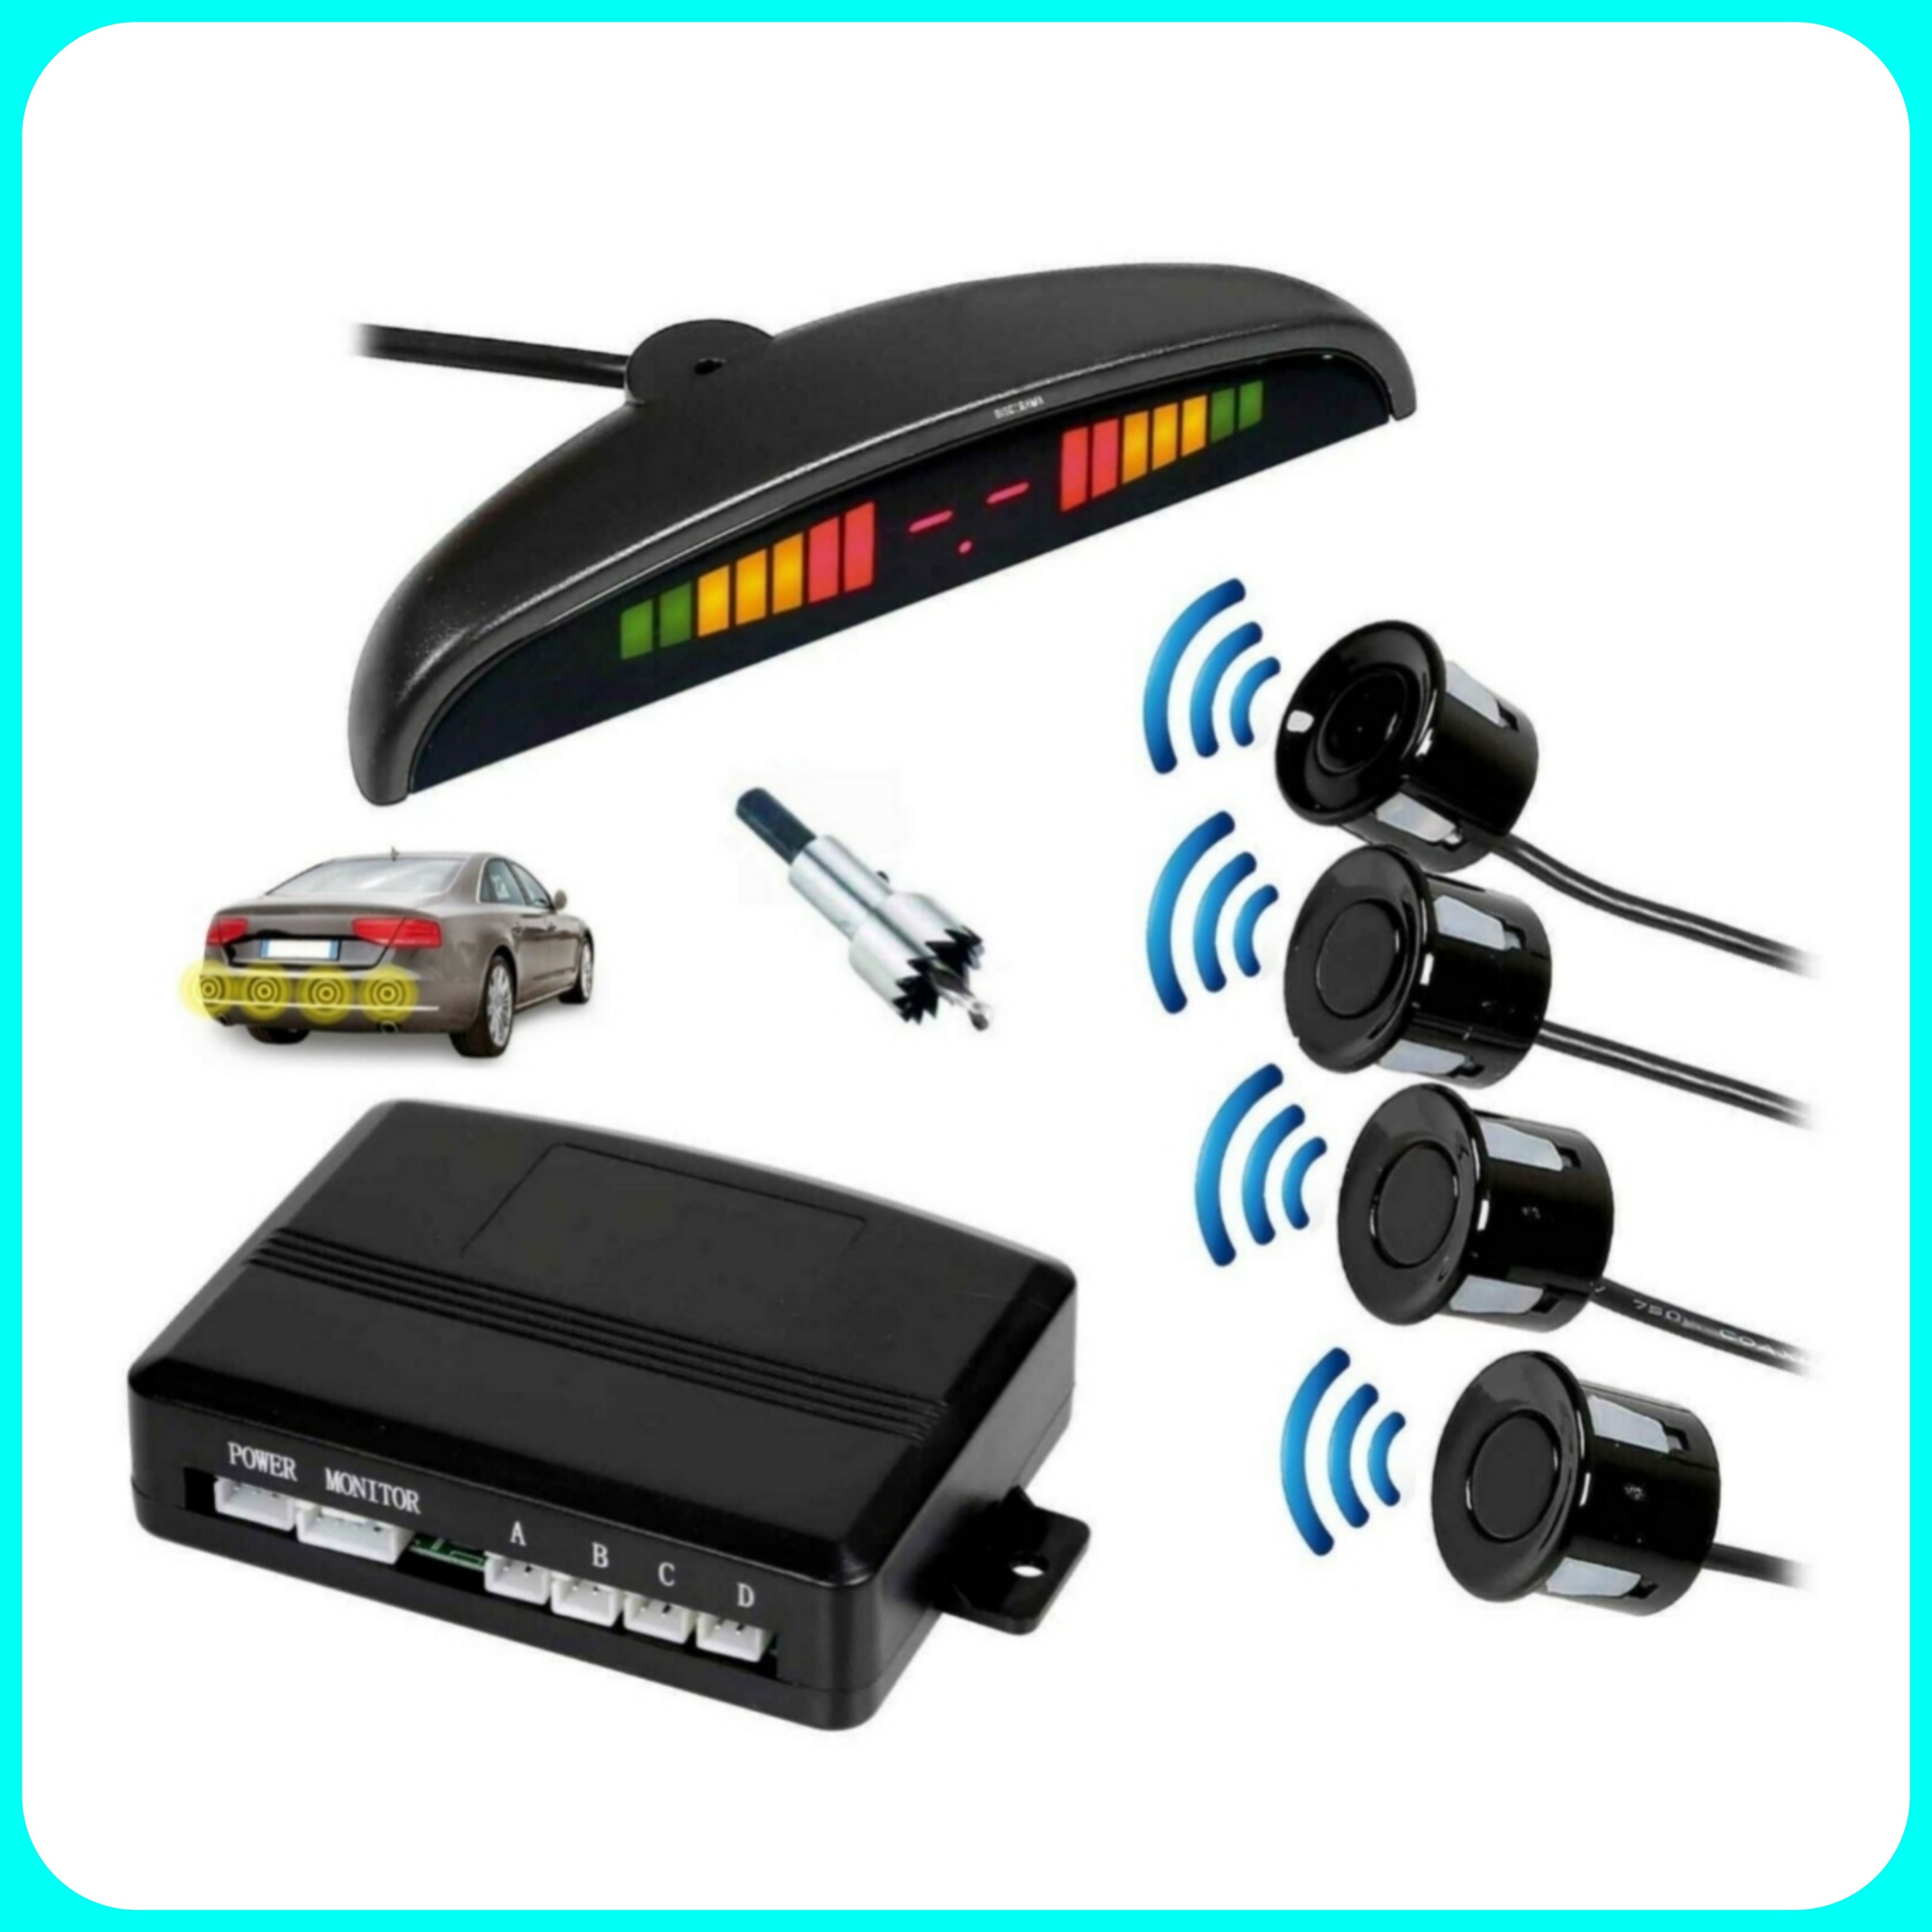 Sensori di Parcheggio - Display LED, Avviso Acustico, Retromarcia, Kit Capsule.